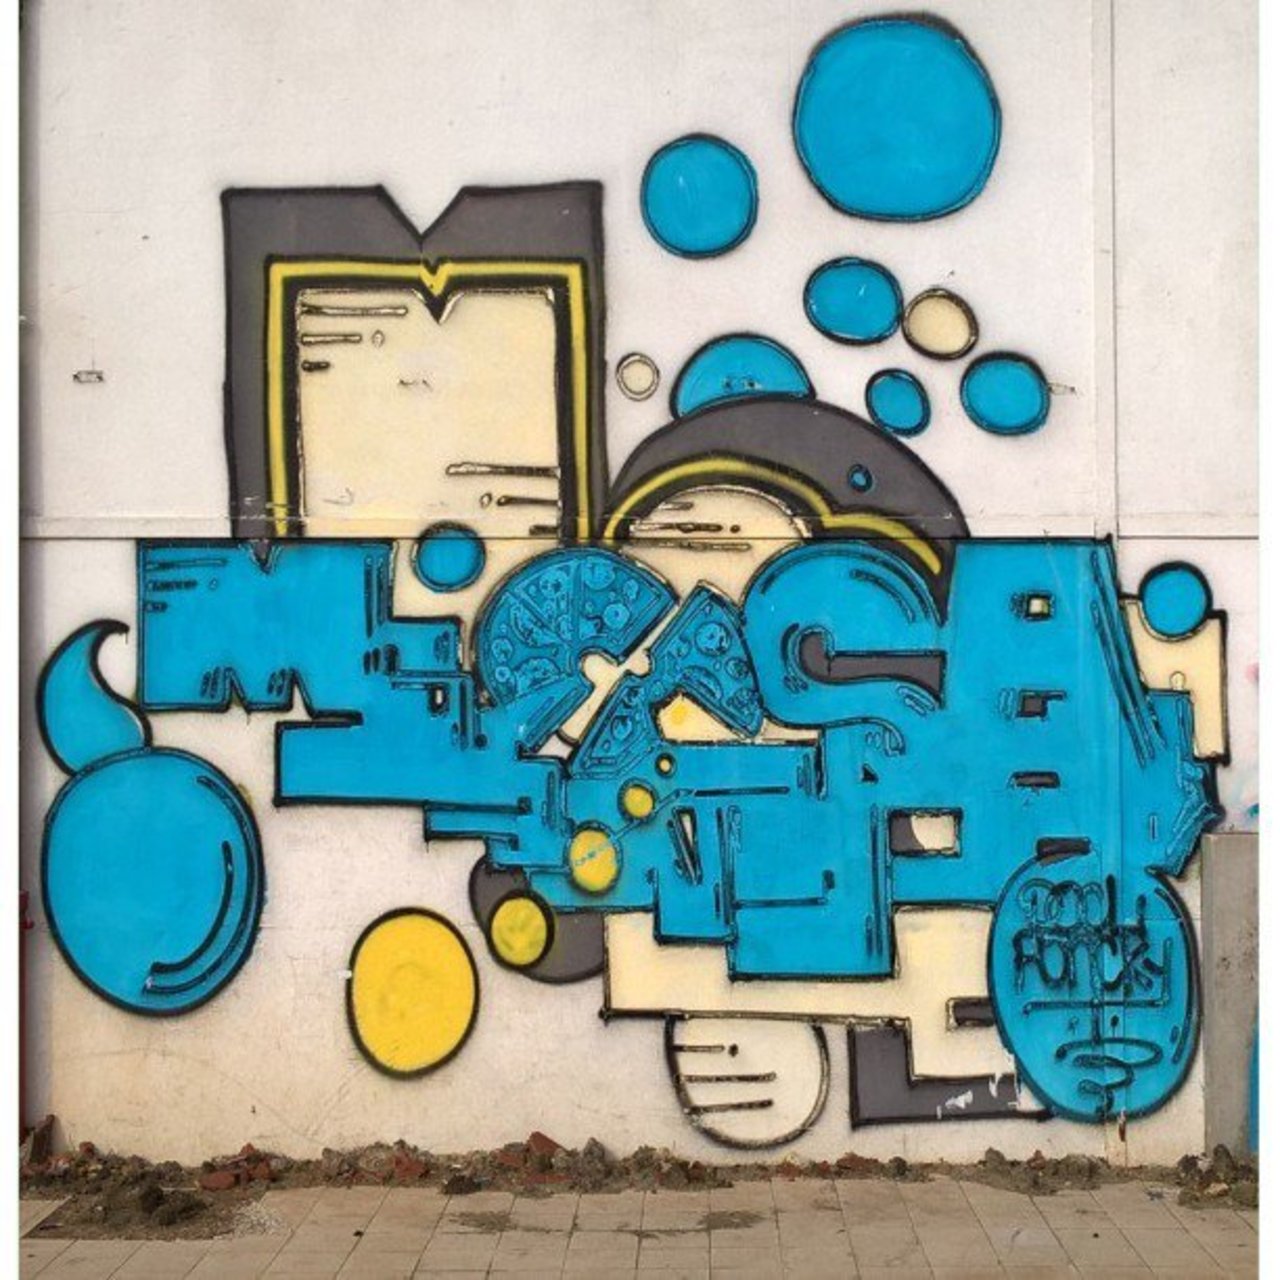 MOSA
#PALcrew #PeaceAndLoveCrew #streetart #graffiti #graff #art #fatcap #bombing #sprayart #spraycanart #wallart #… https://t.co/sELPGOpwYf